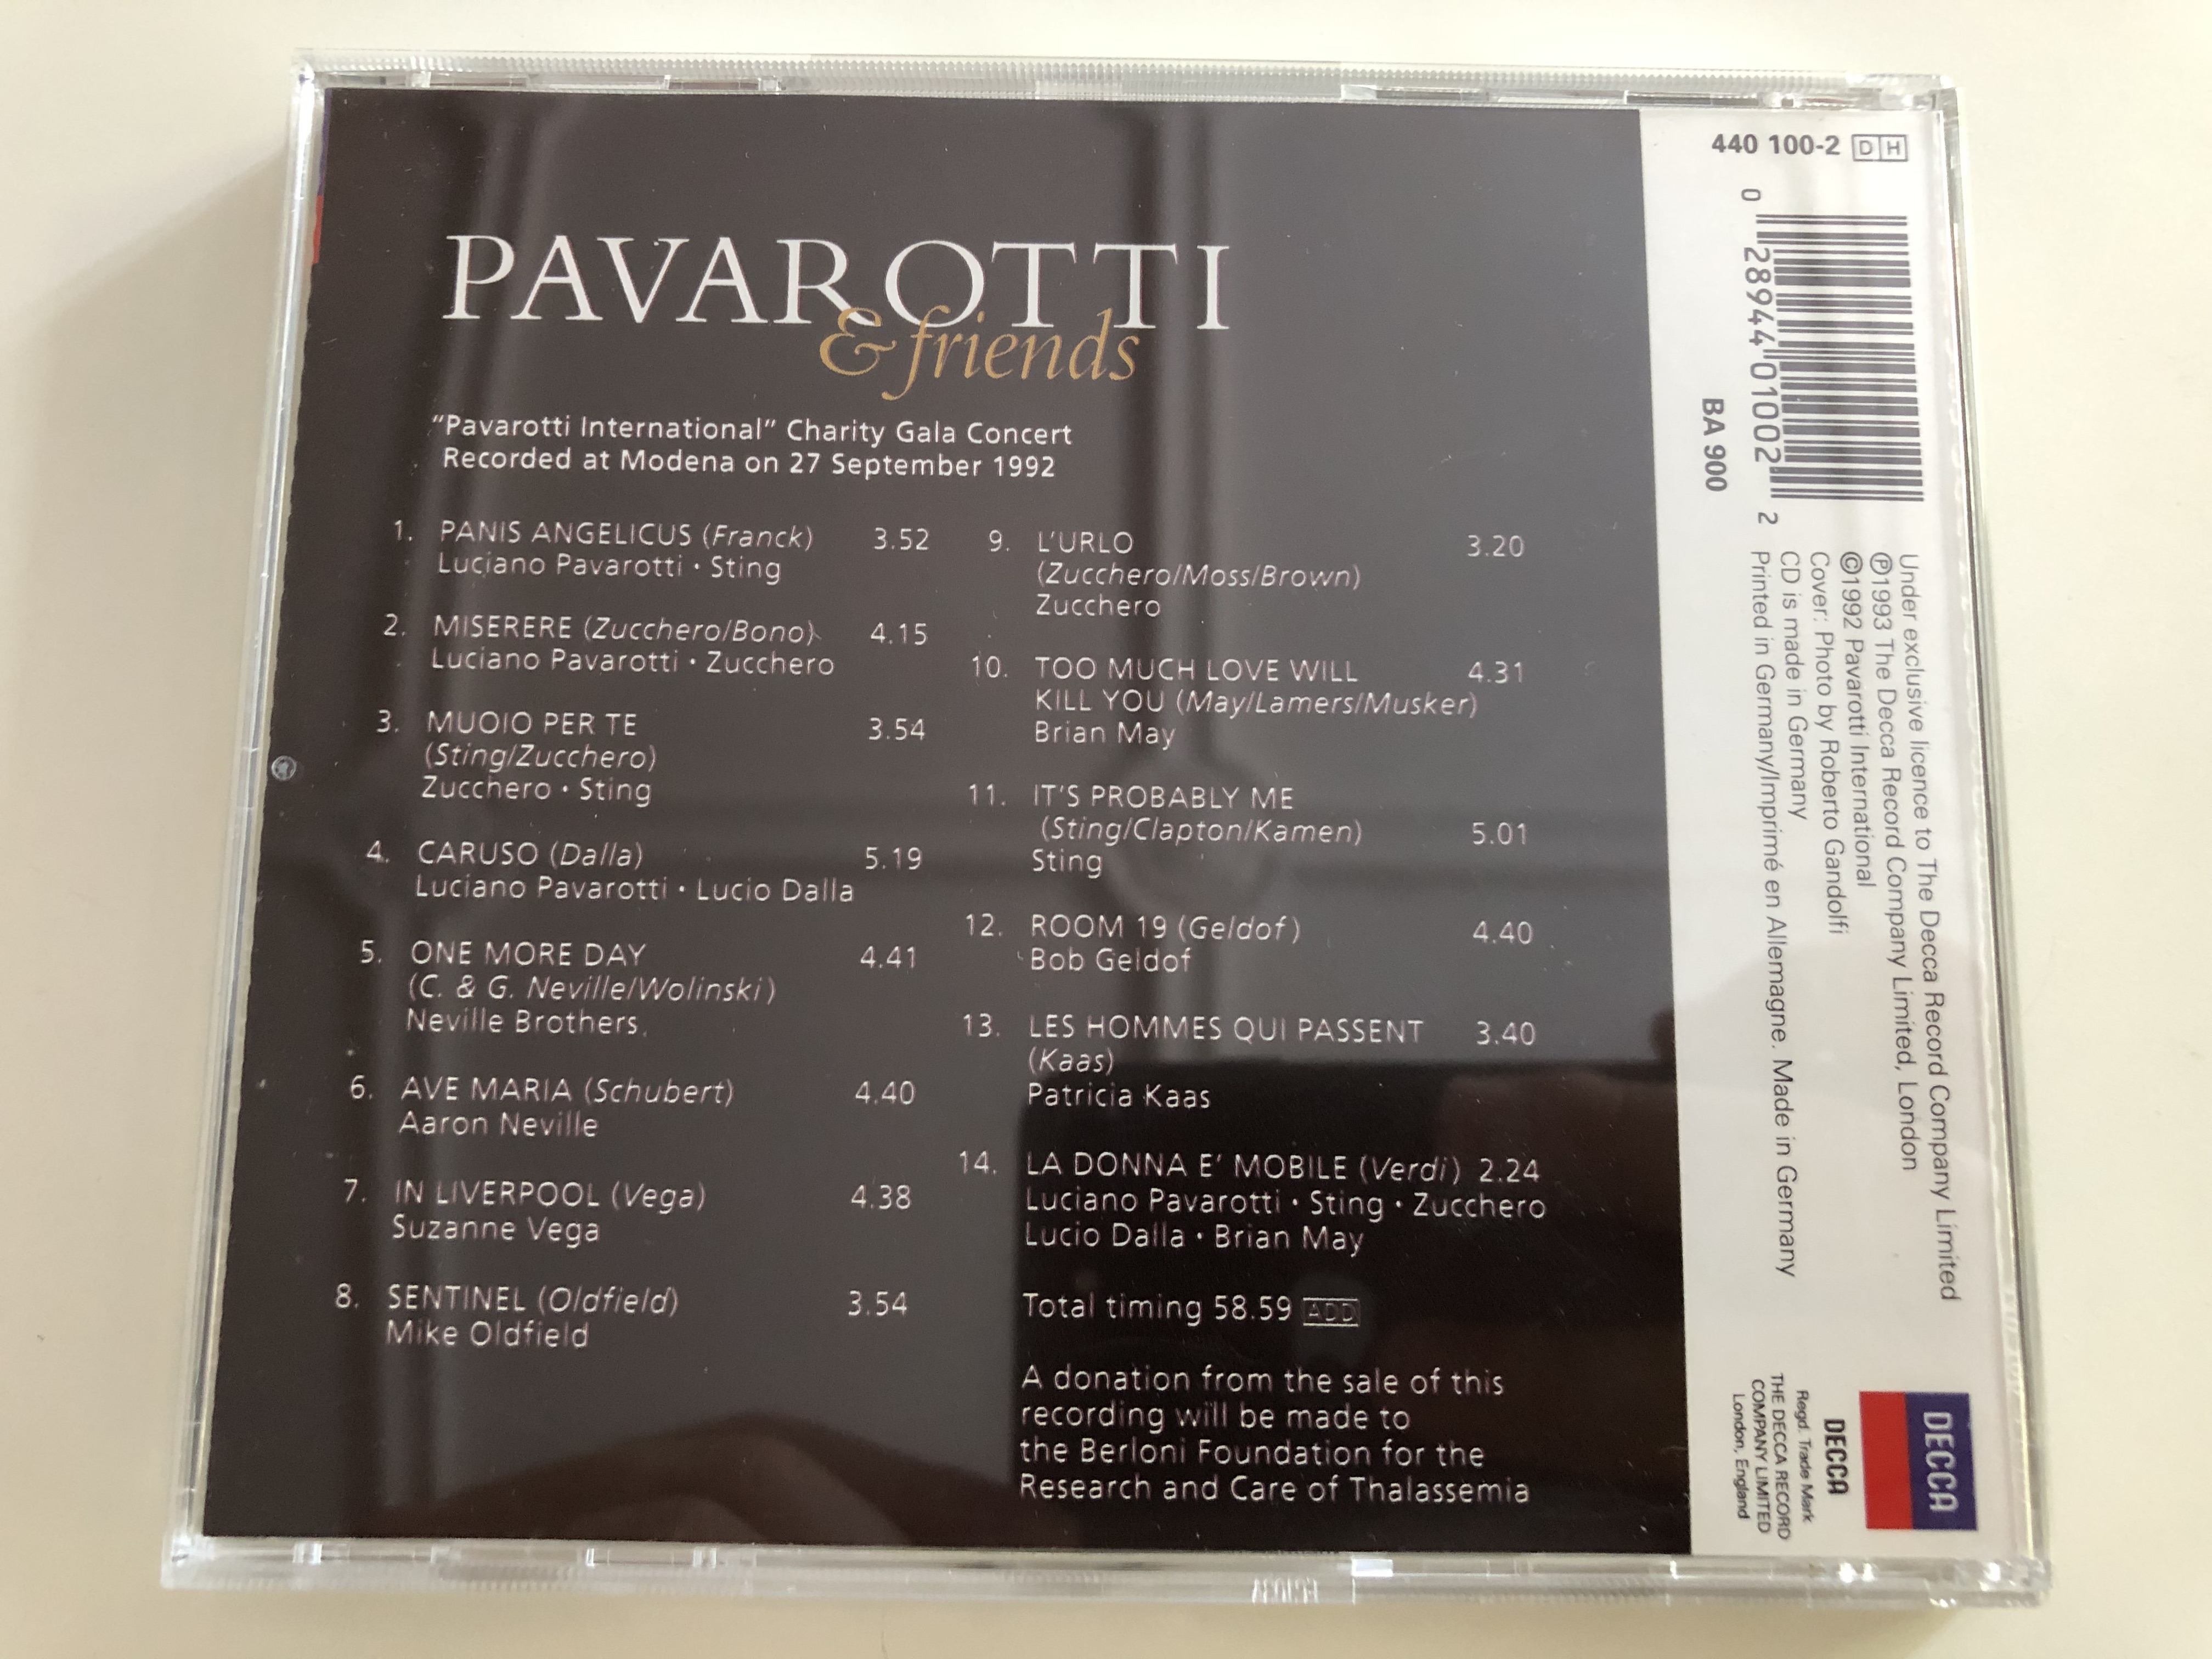 pavarotti-friends-sting-zucchero-lucio-dalla-neville-brothers-brian-may-bob-geldolf-pavarotti-international-charity-gala-concert-decca-audio-cd-1992-440-100-2-7-.jpg